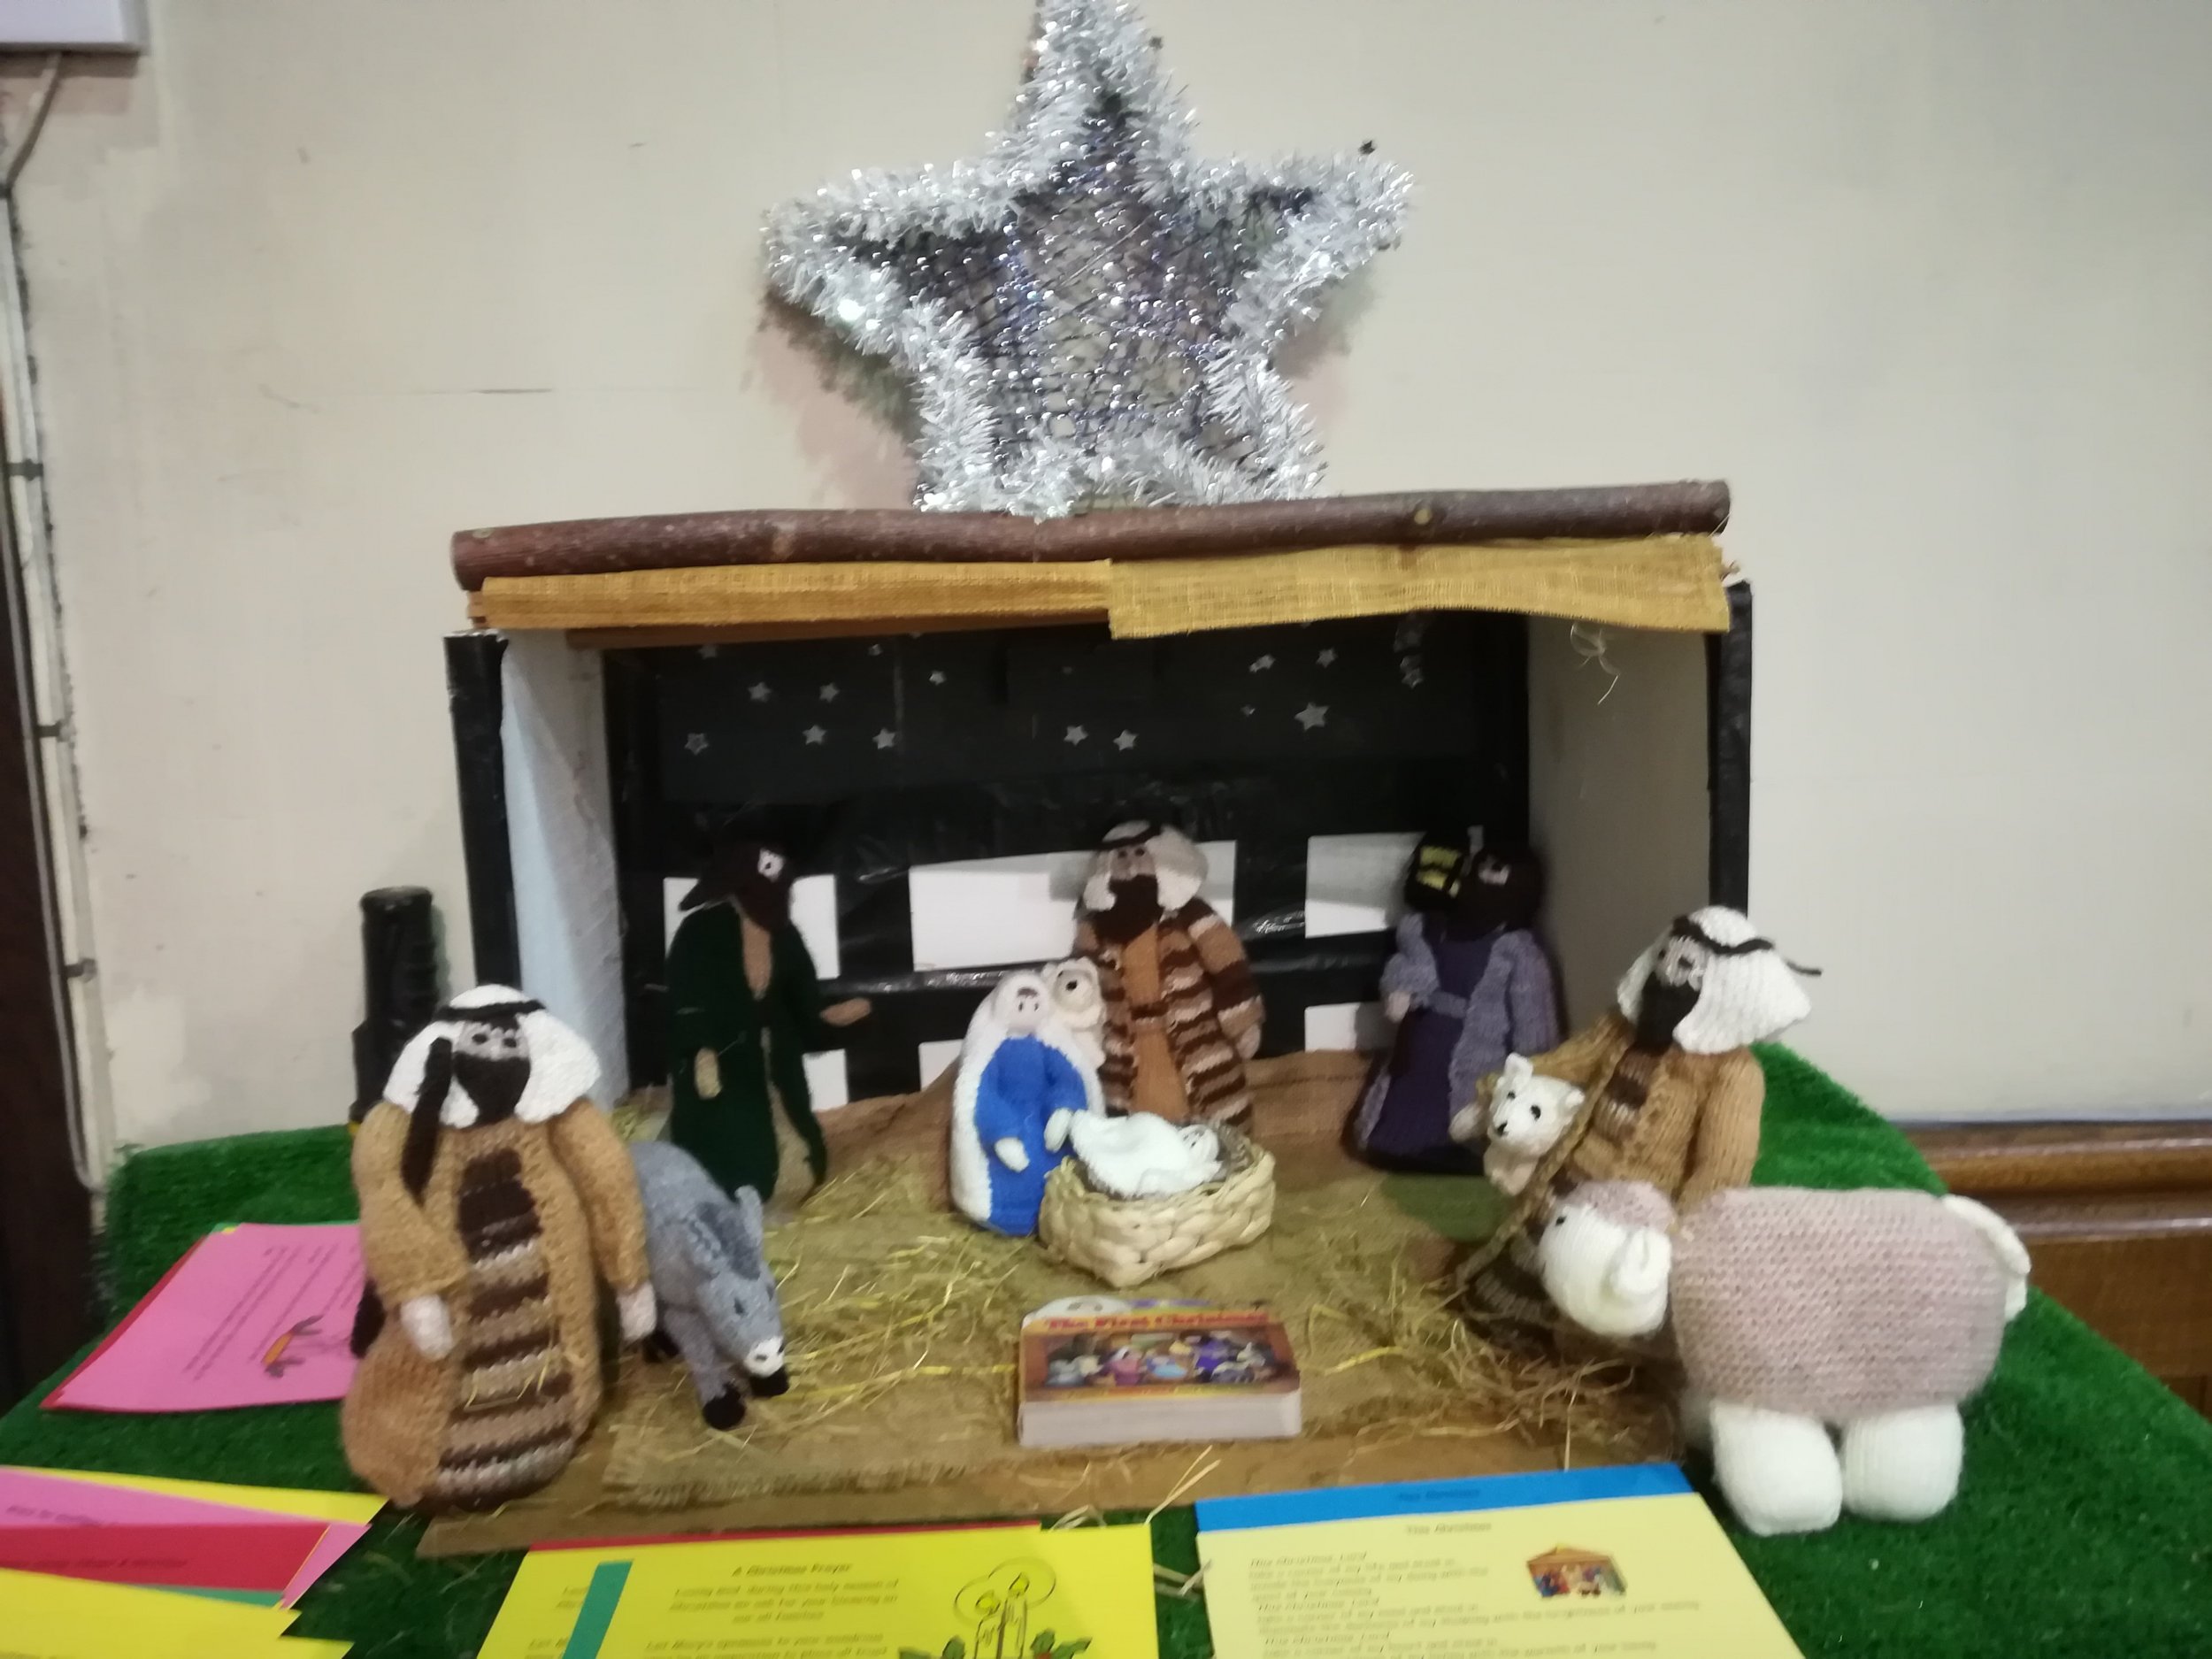 CC Nativity scene 2.jpg